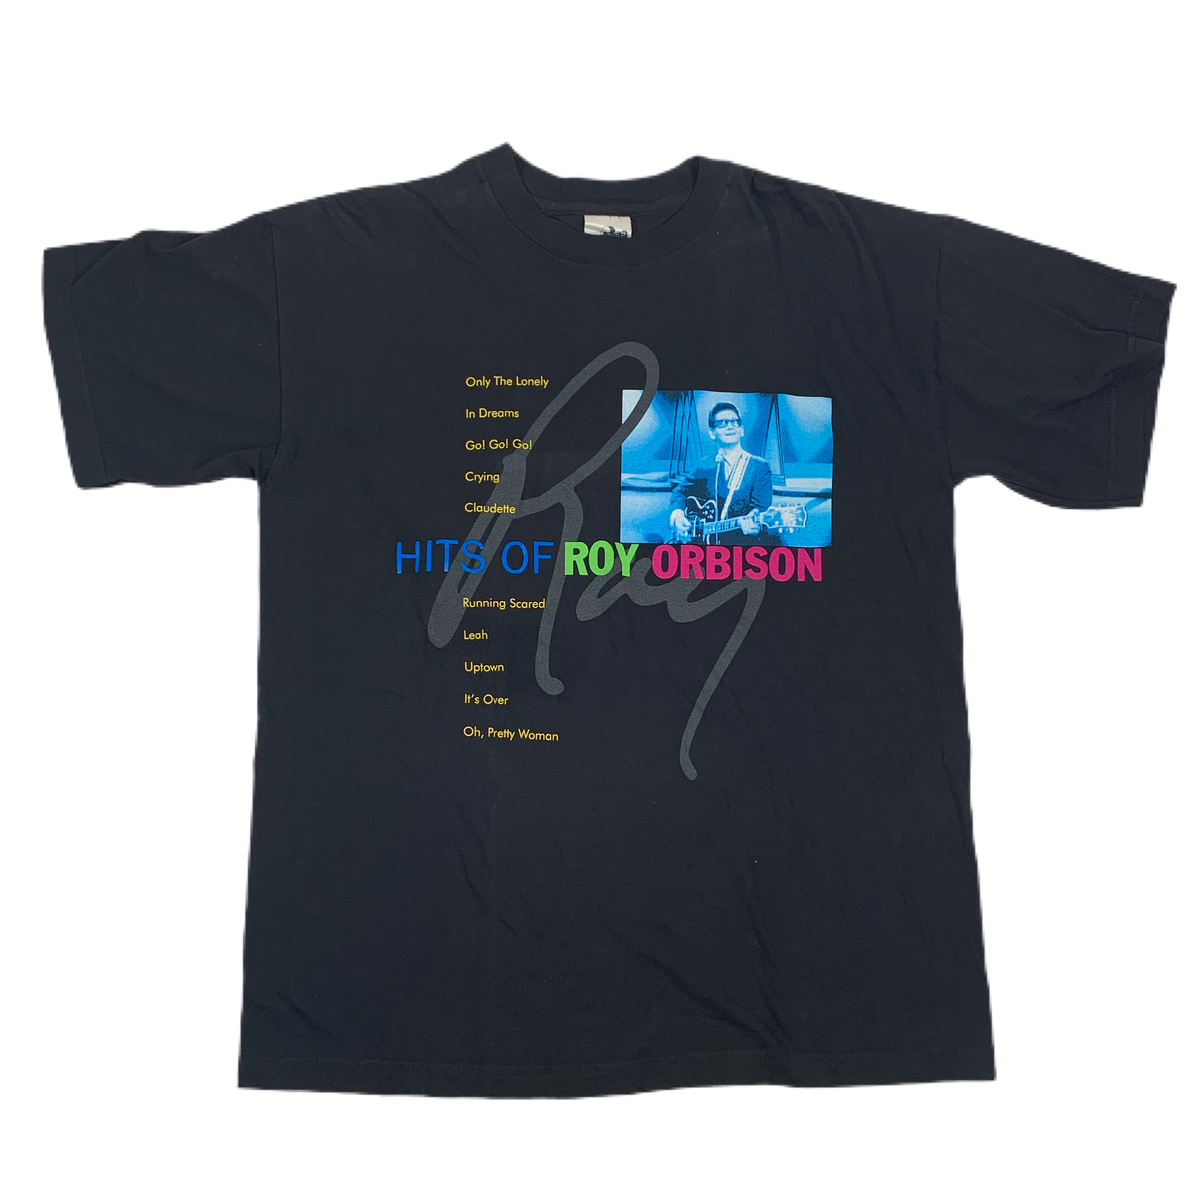 Vintage Roy Orbison “Hits” T-Shirt - jointcustodydc